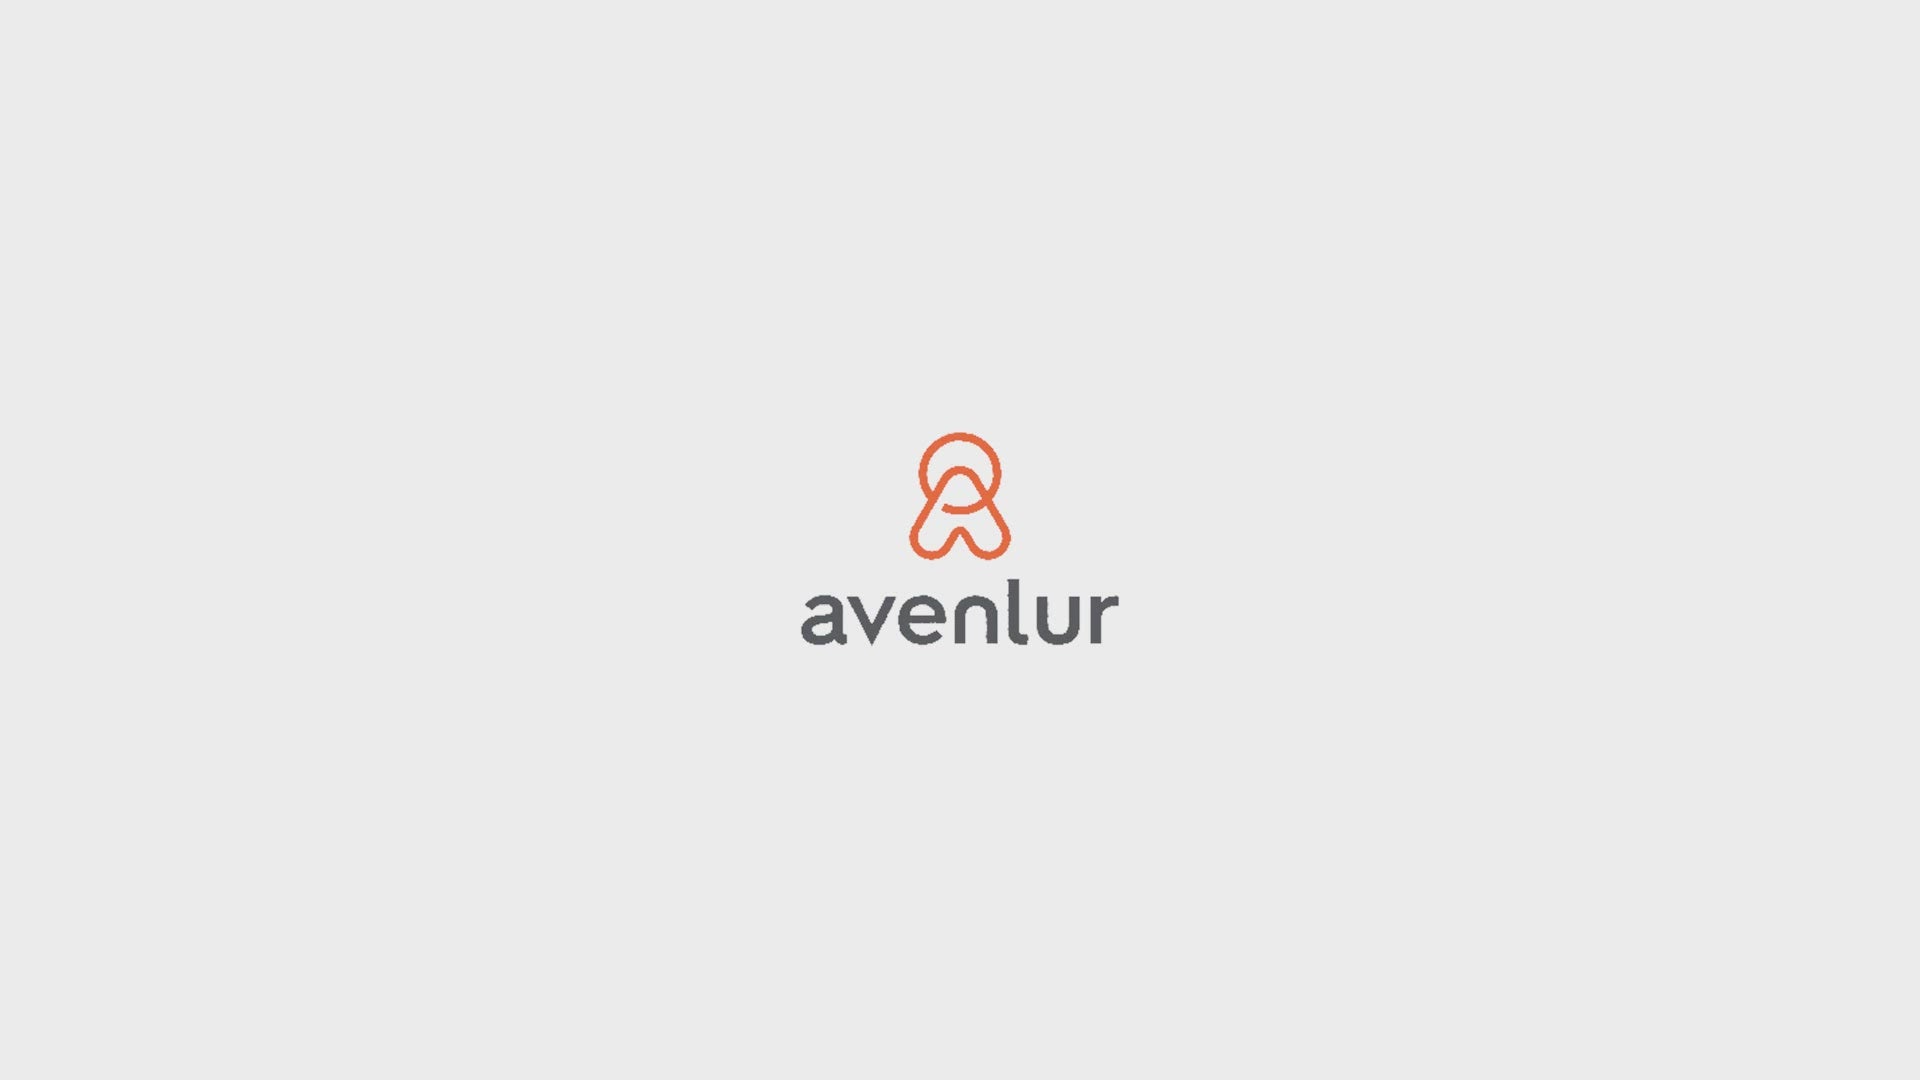 Avenlur Name and Orange 'A' Logo